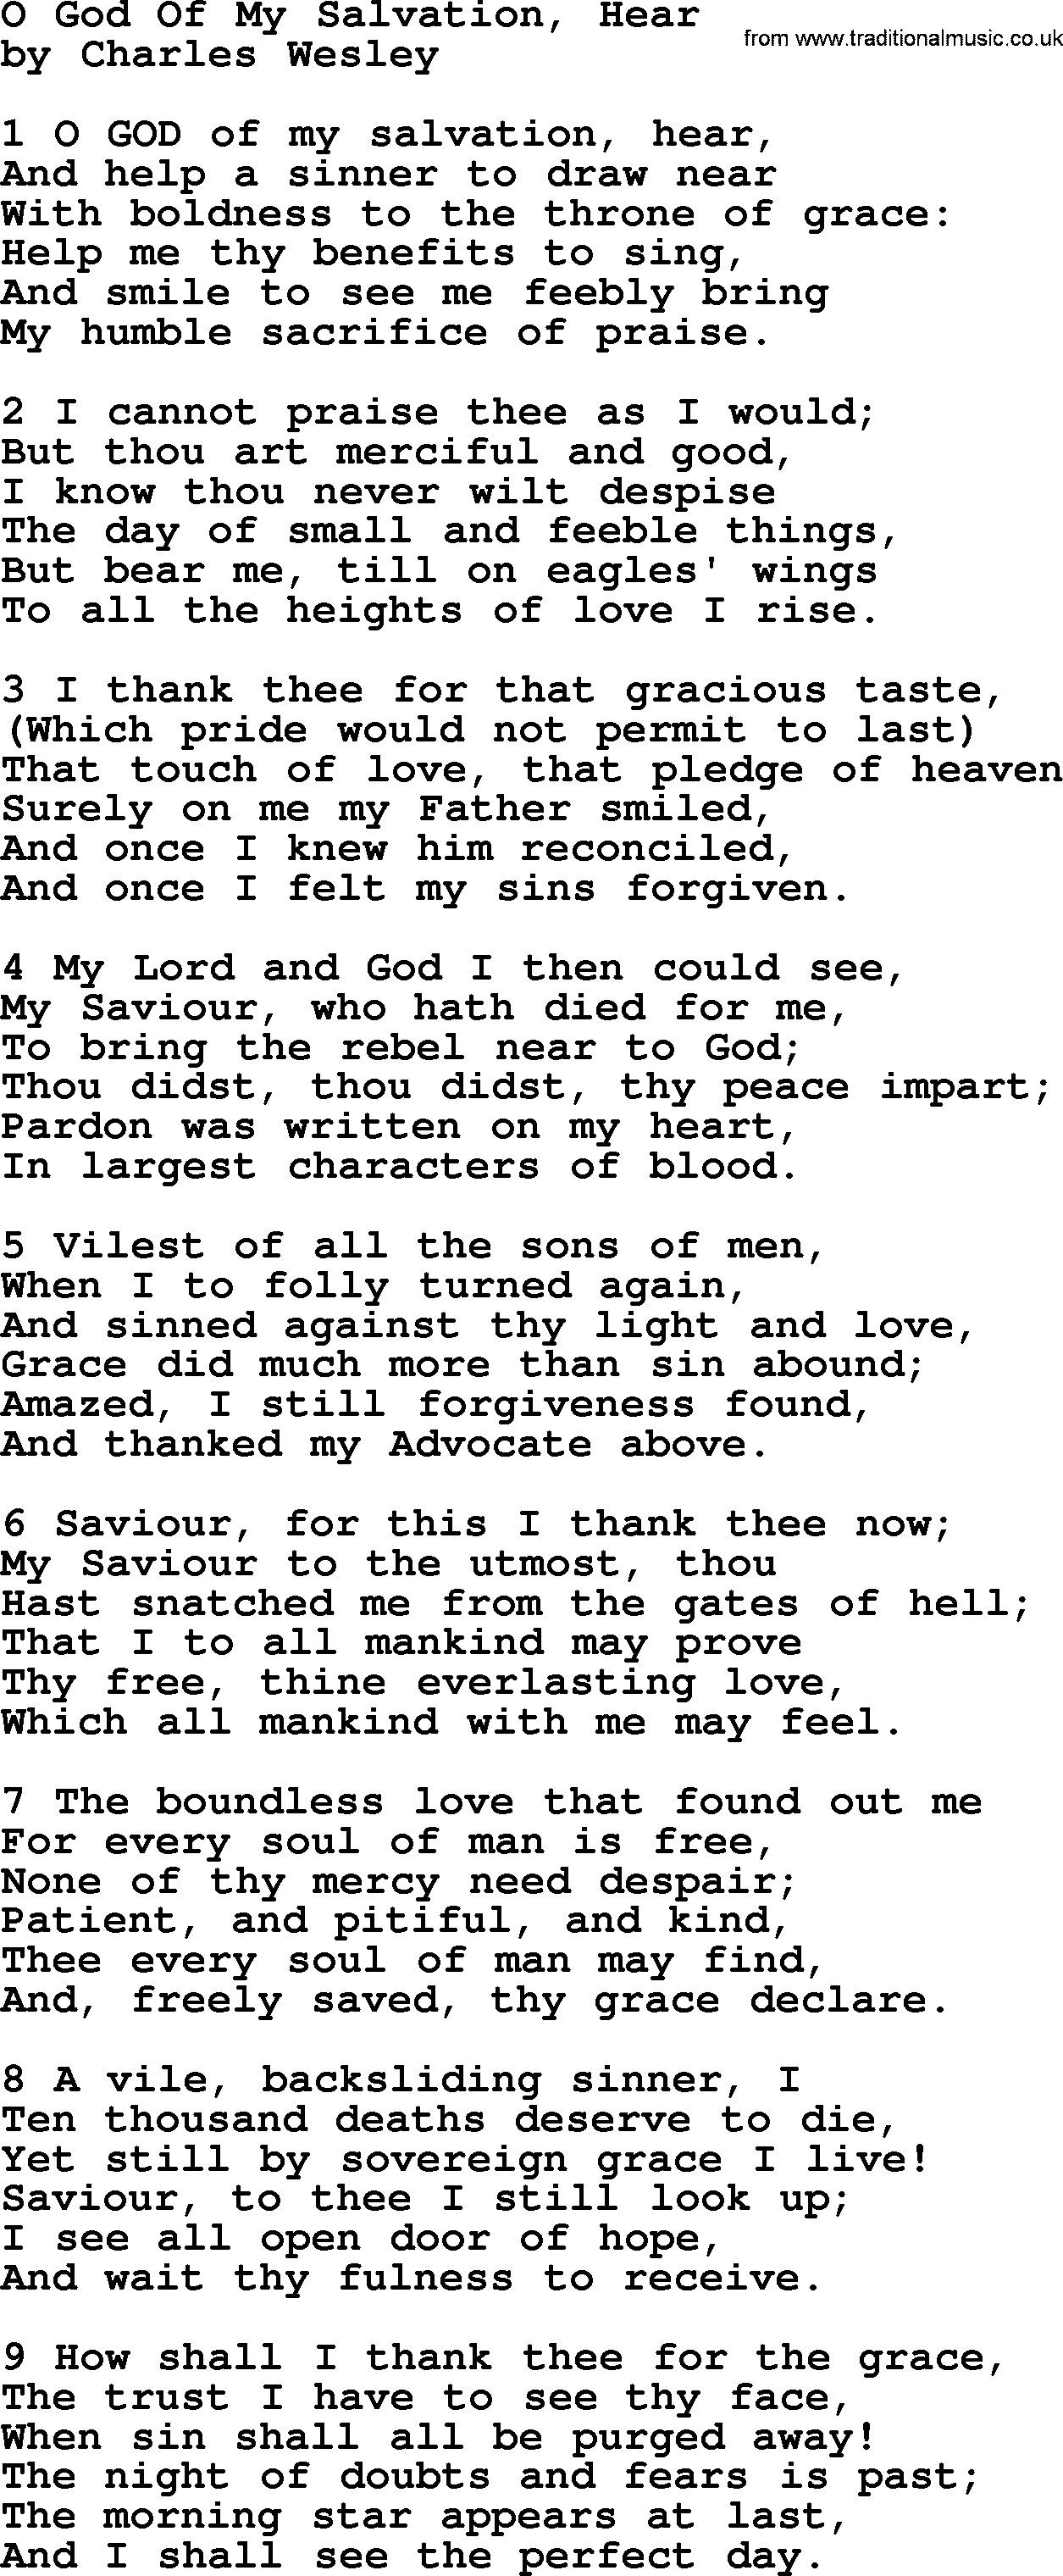 Charles Wesley hymn: O God Of My Salvation, Hear, lyrics